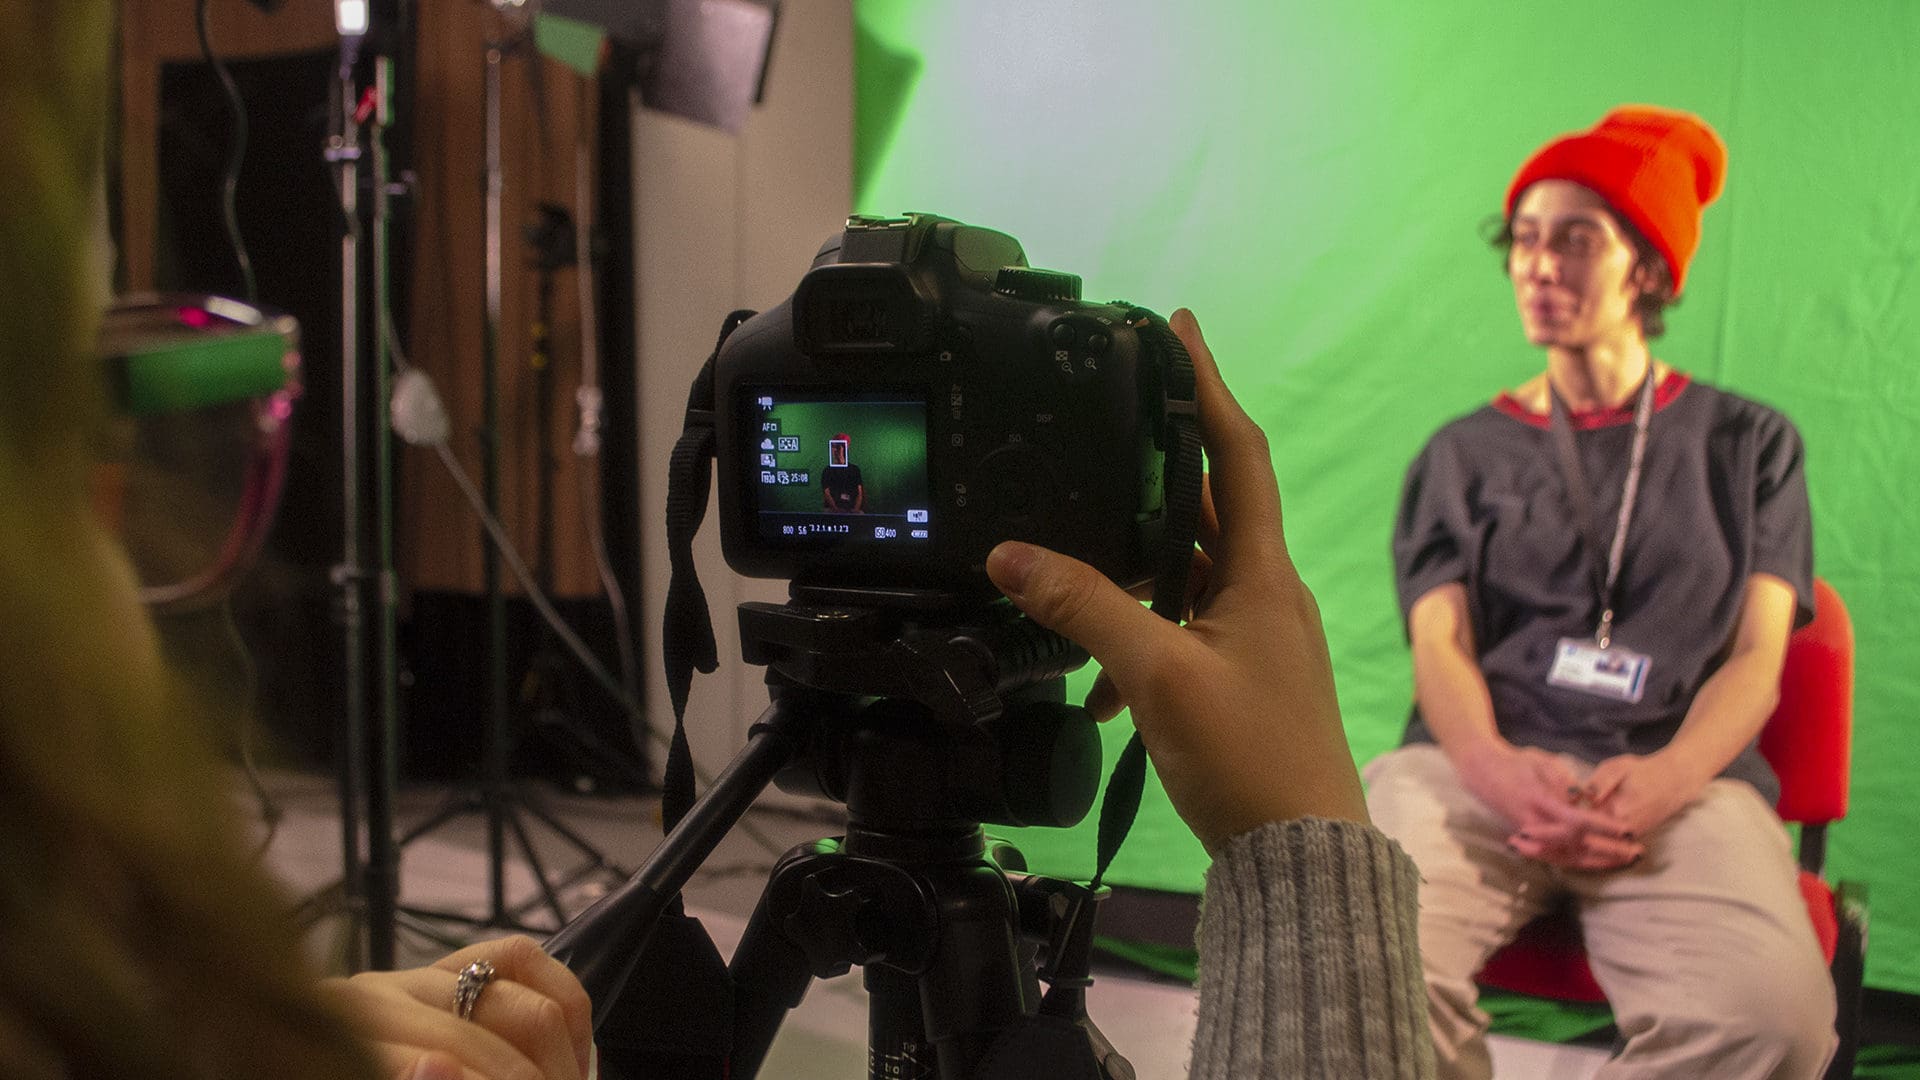  Creative Media student filming on green screen